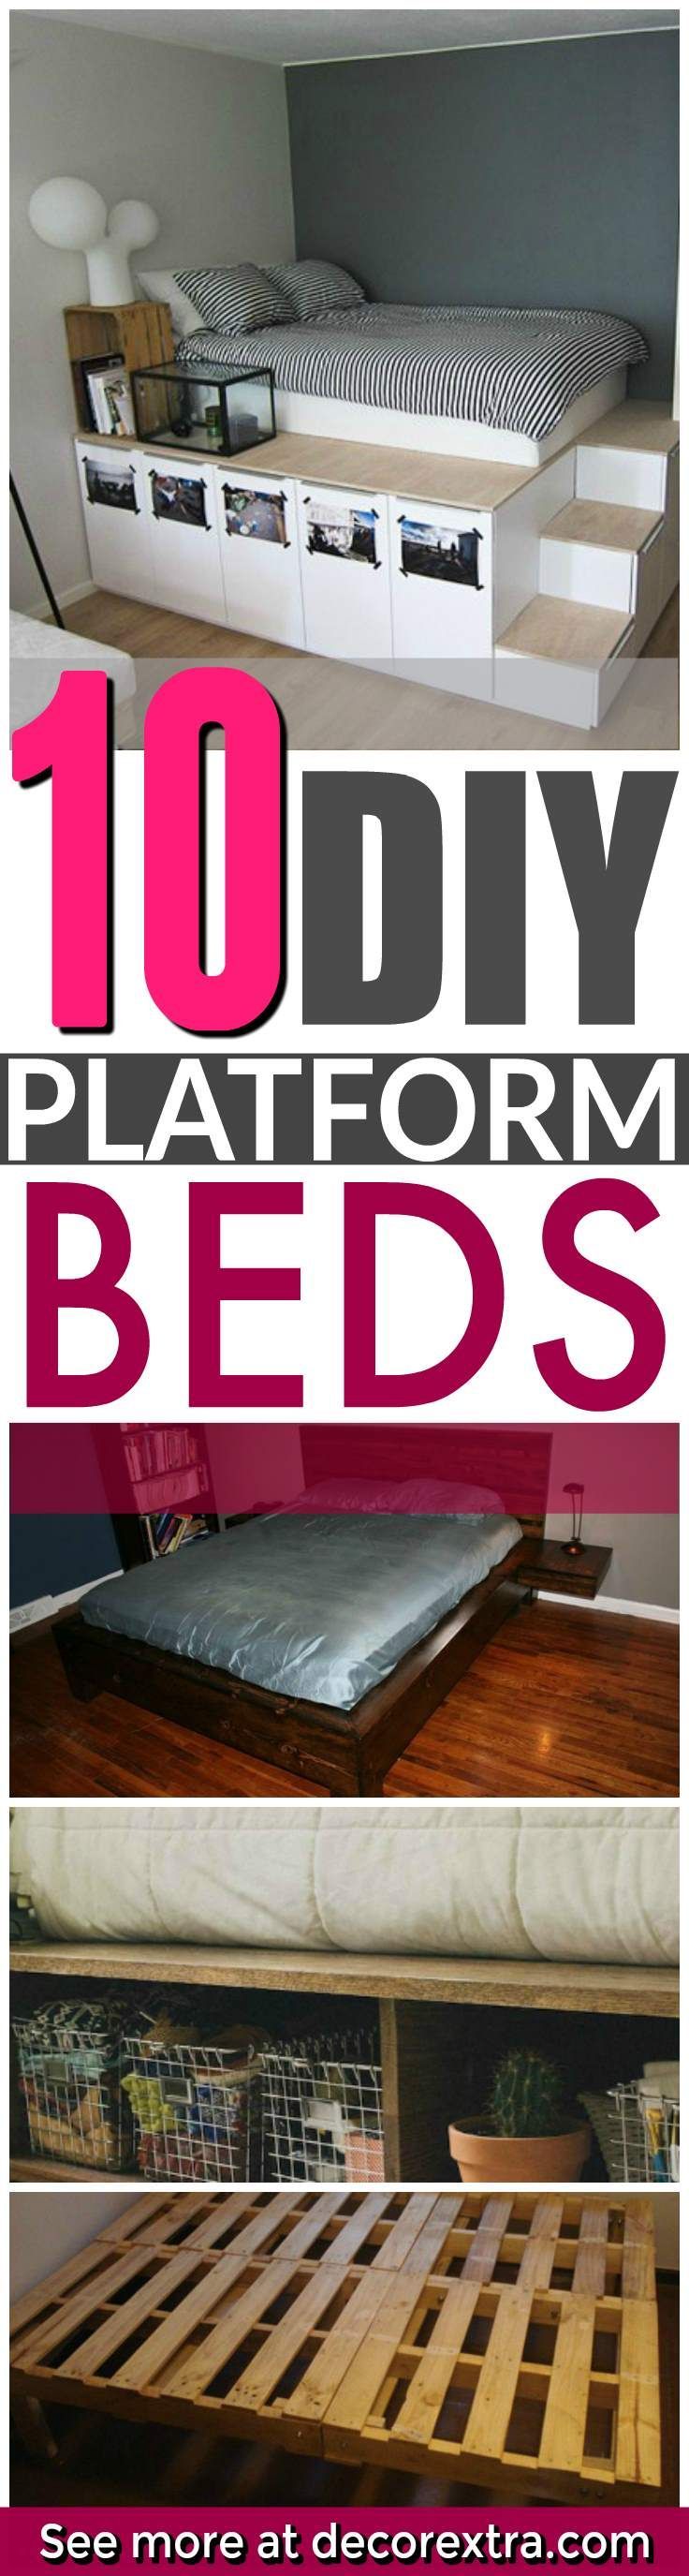 DIY Platform Beds with Storage, Platform Bed DIY Projects, DIY Ideas